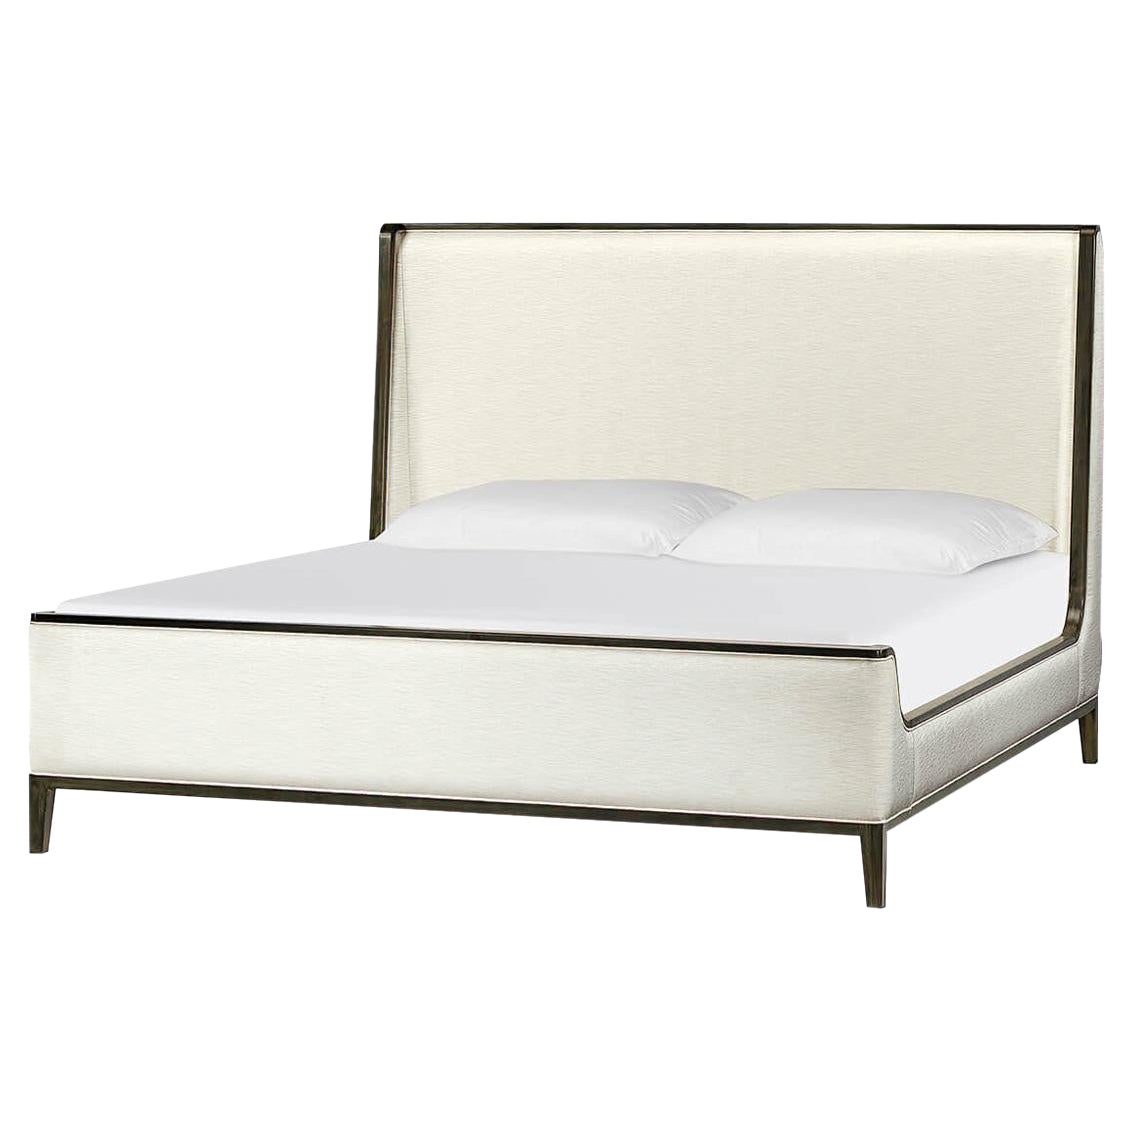 Modern Upholstered King Size Bed For Sale